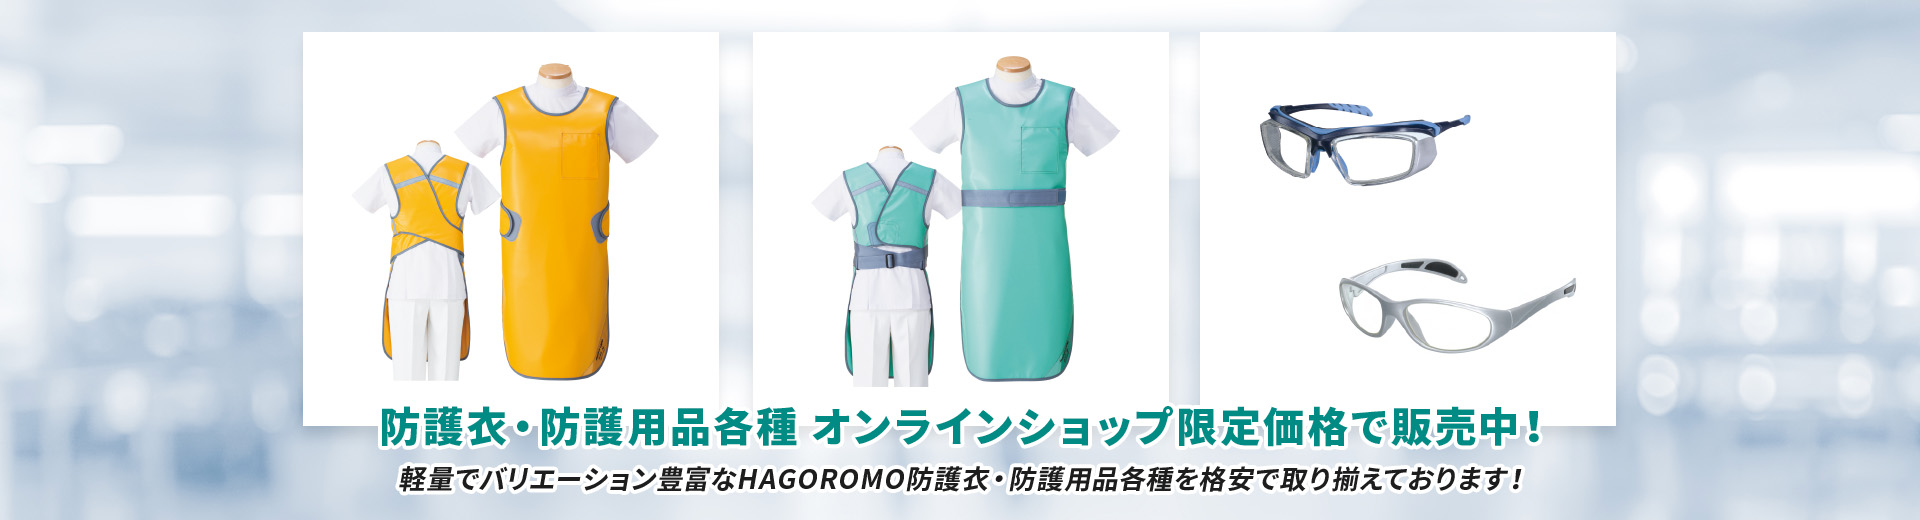 HAGOROMO防護衣・防護用品